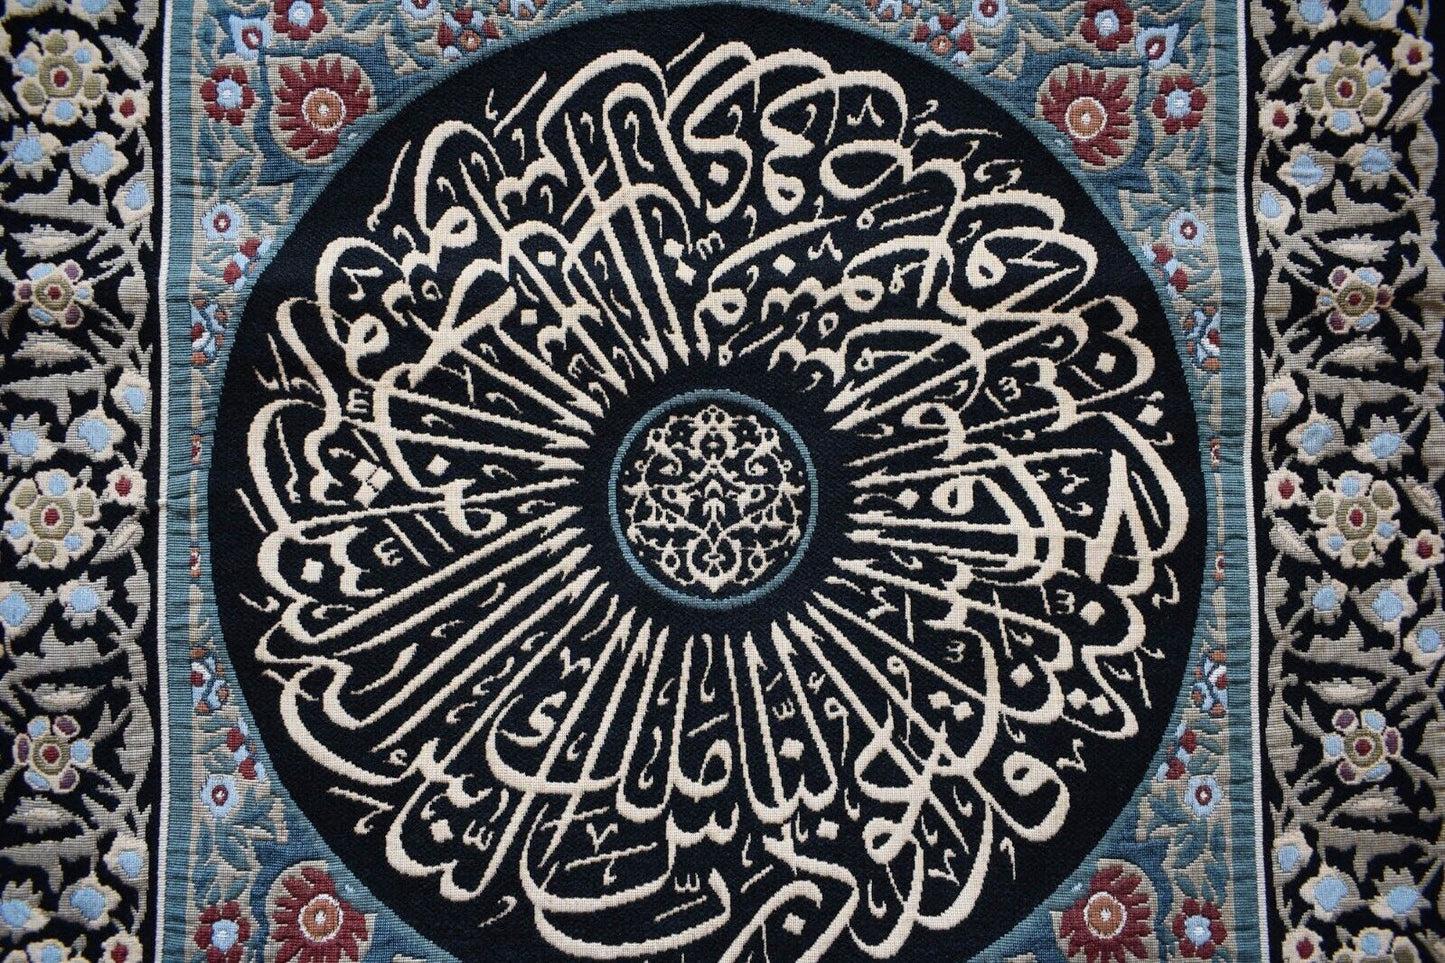 Islamic Art Quran Gobelin wall hanging tapestry Art-Surt Al Nas